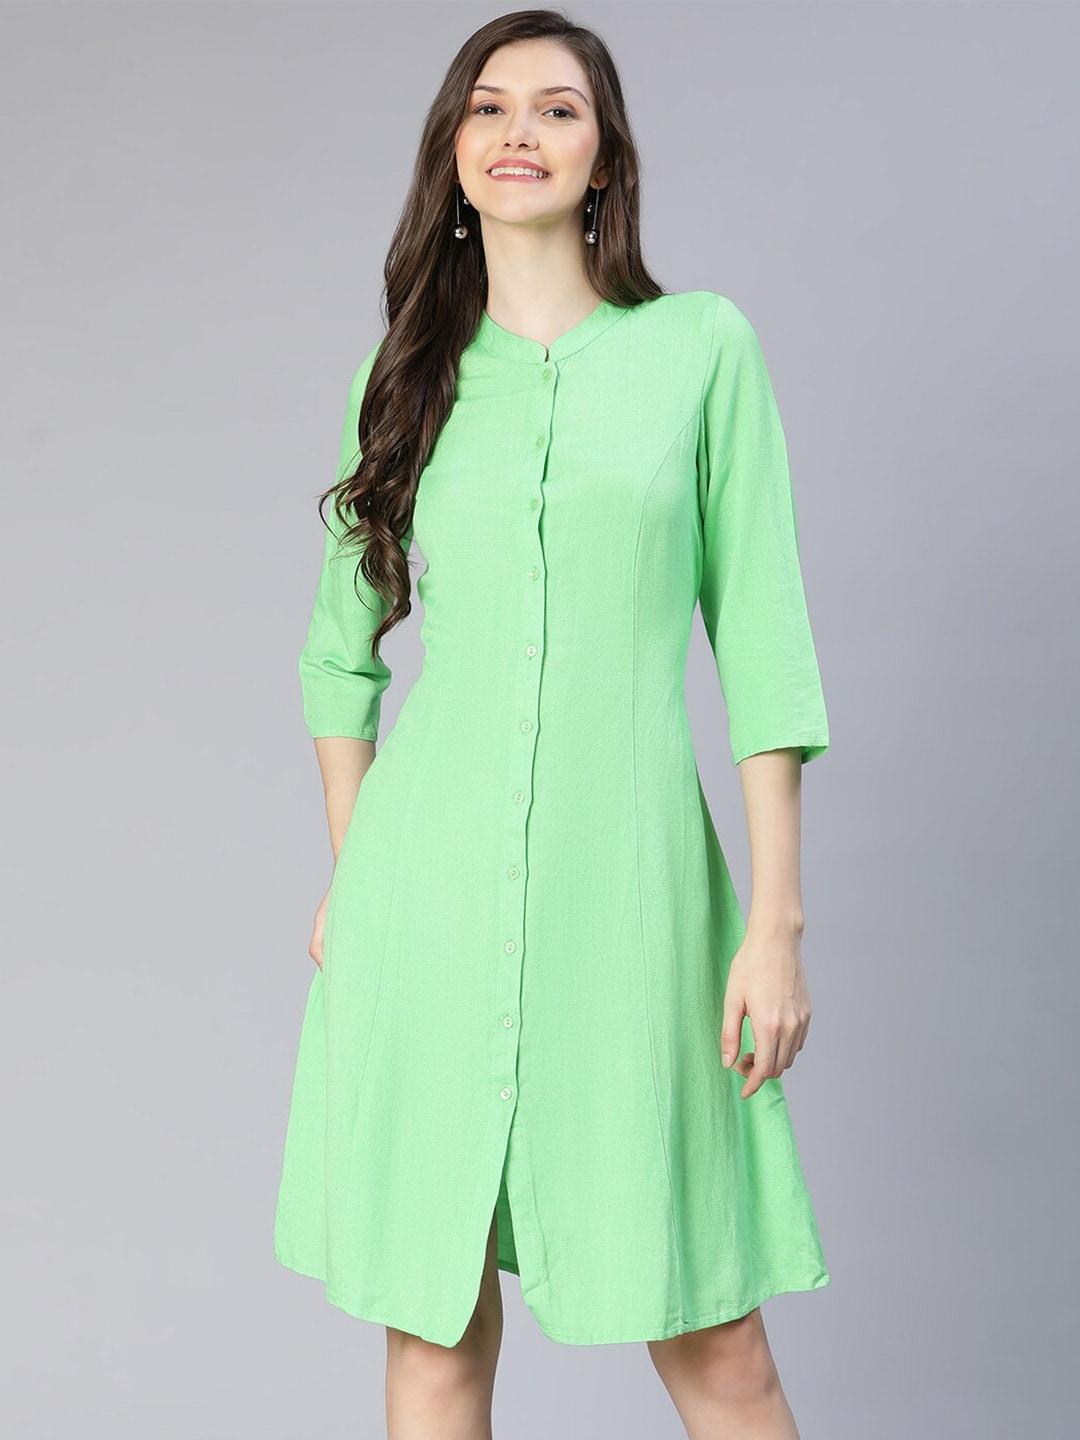 oxolloxo-sea-green-a-line-button-down-dress